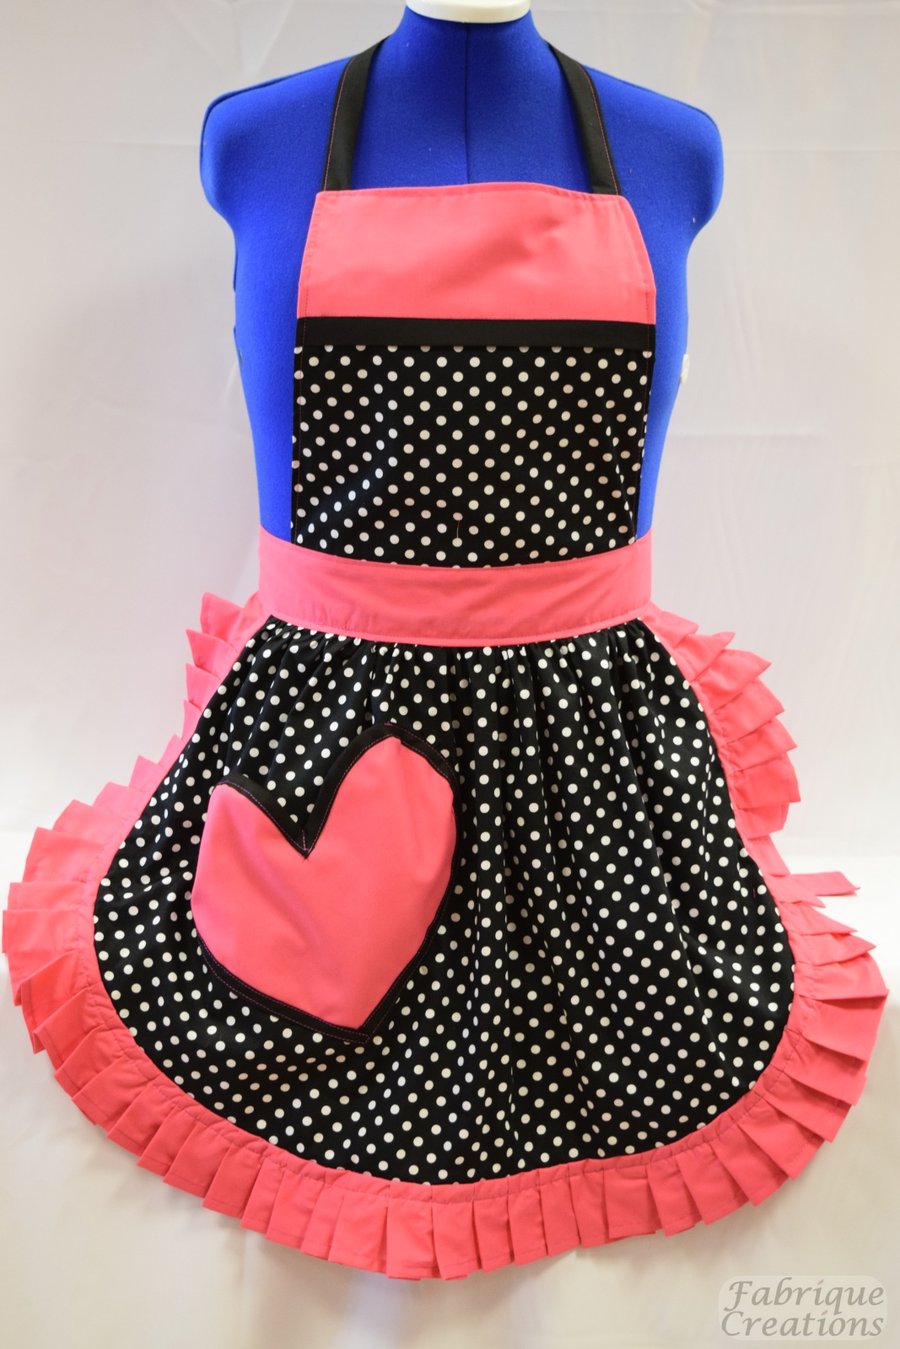 Vintage 50s Style Full Apron - Valentines Black & White Polka Dot with Pink Trim